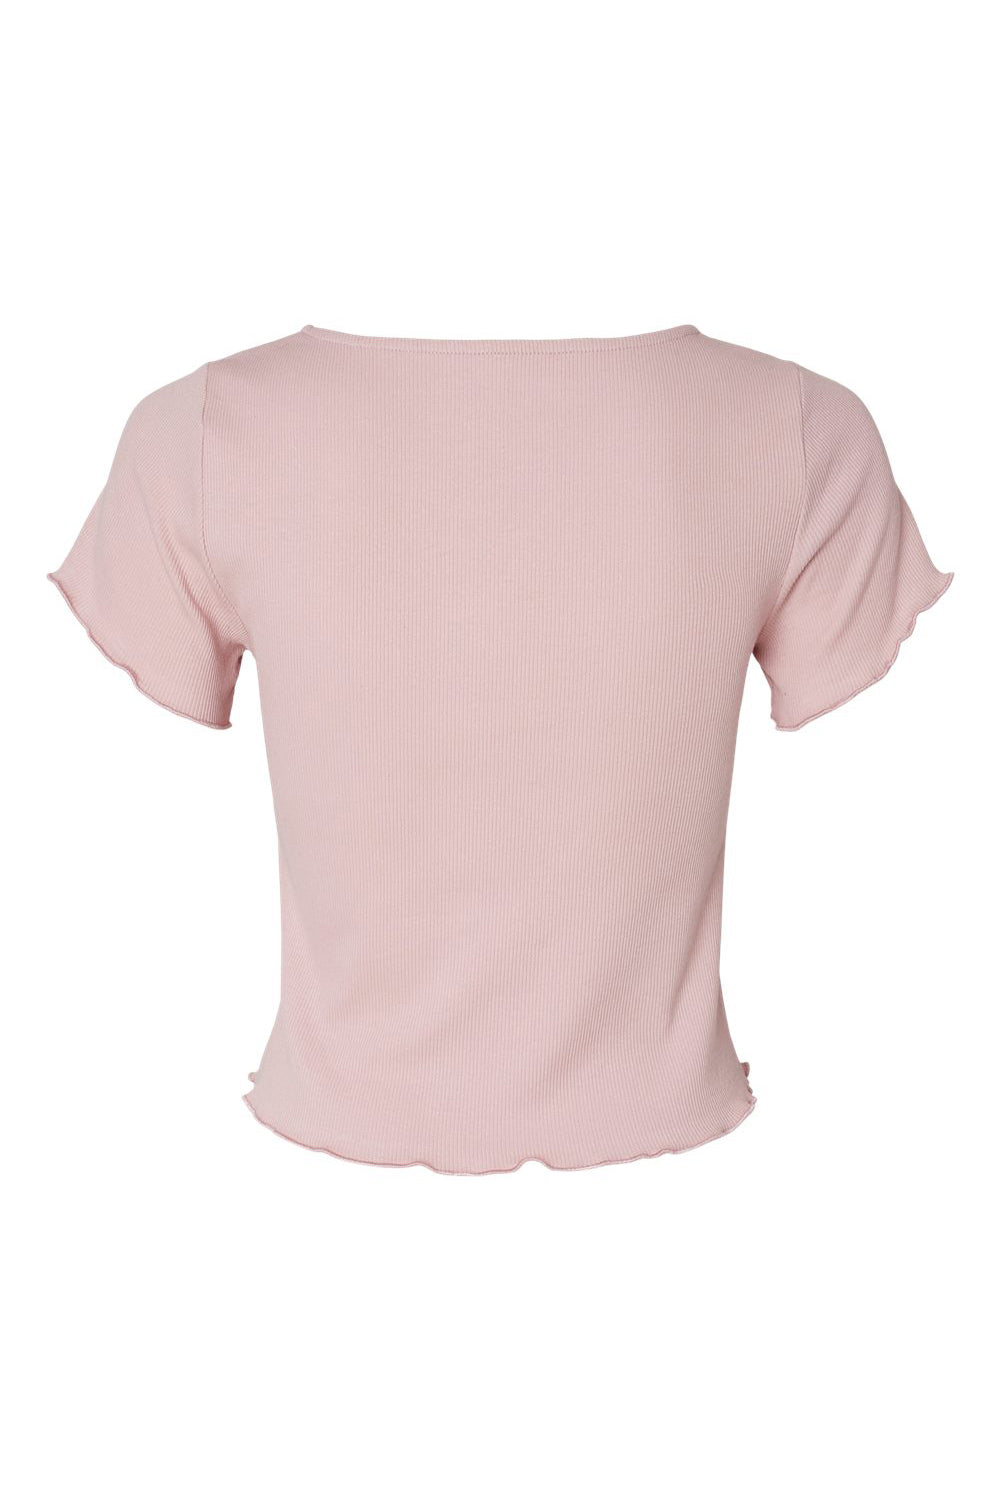 Boxercraft BW2403 Womens Baby Rib Short Sleeve Scoop Neck T-Shirt Blush Pink Flat Back